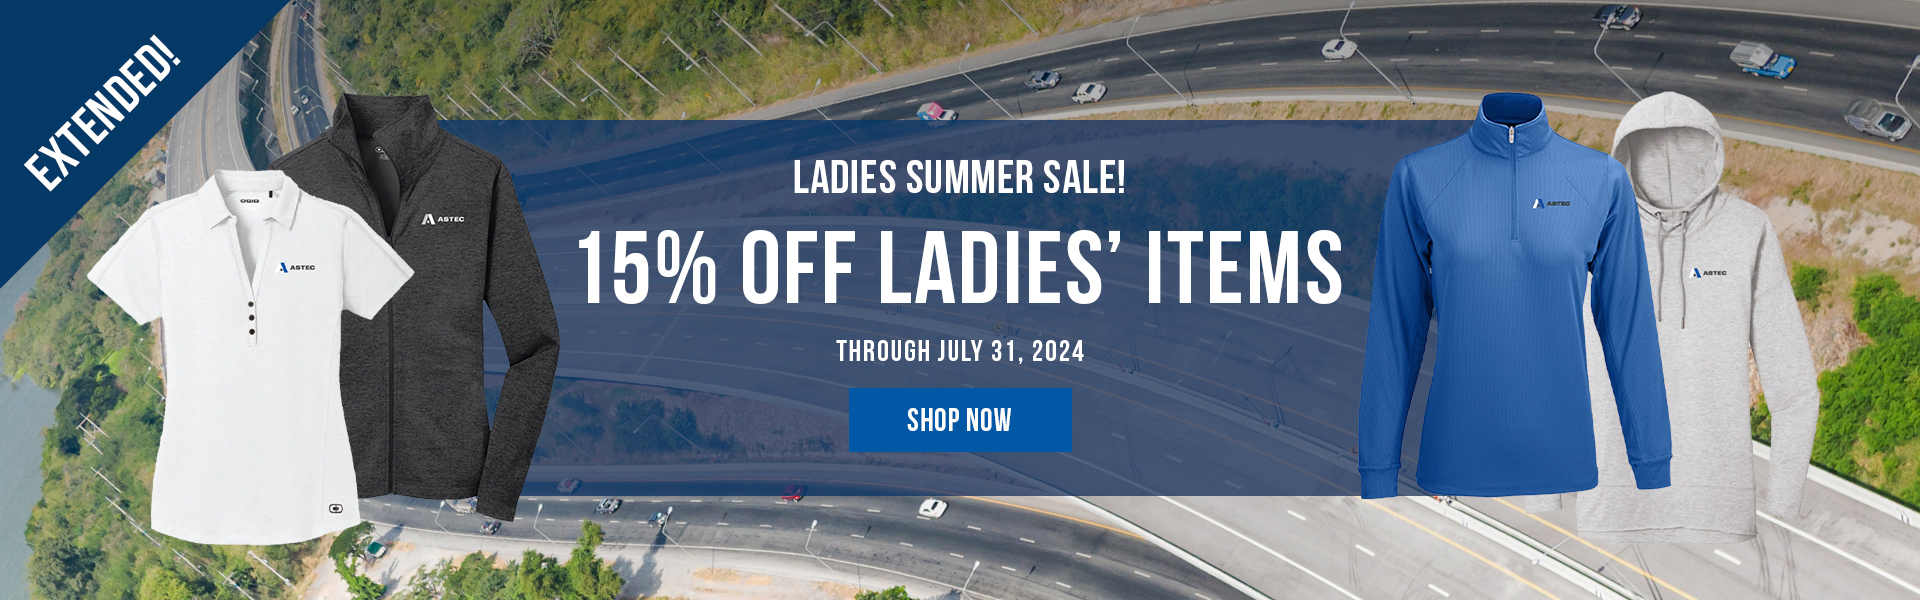 15% off ladies' items through July 31, 2024.